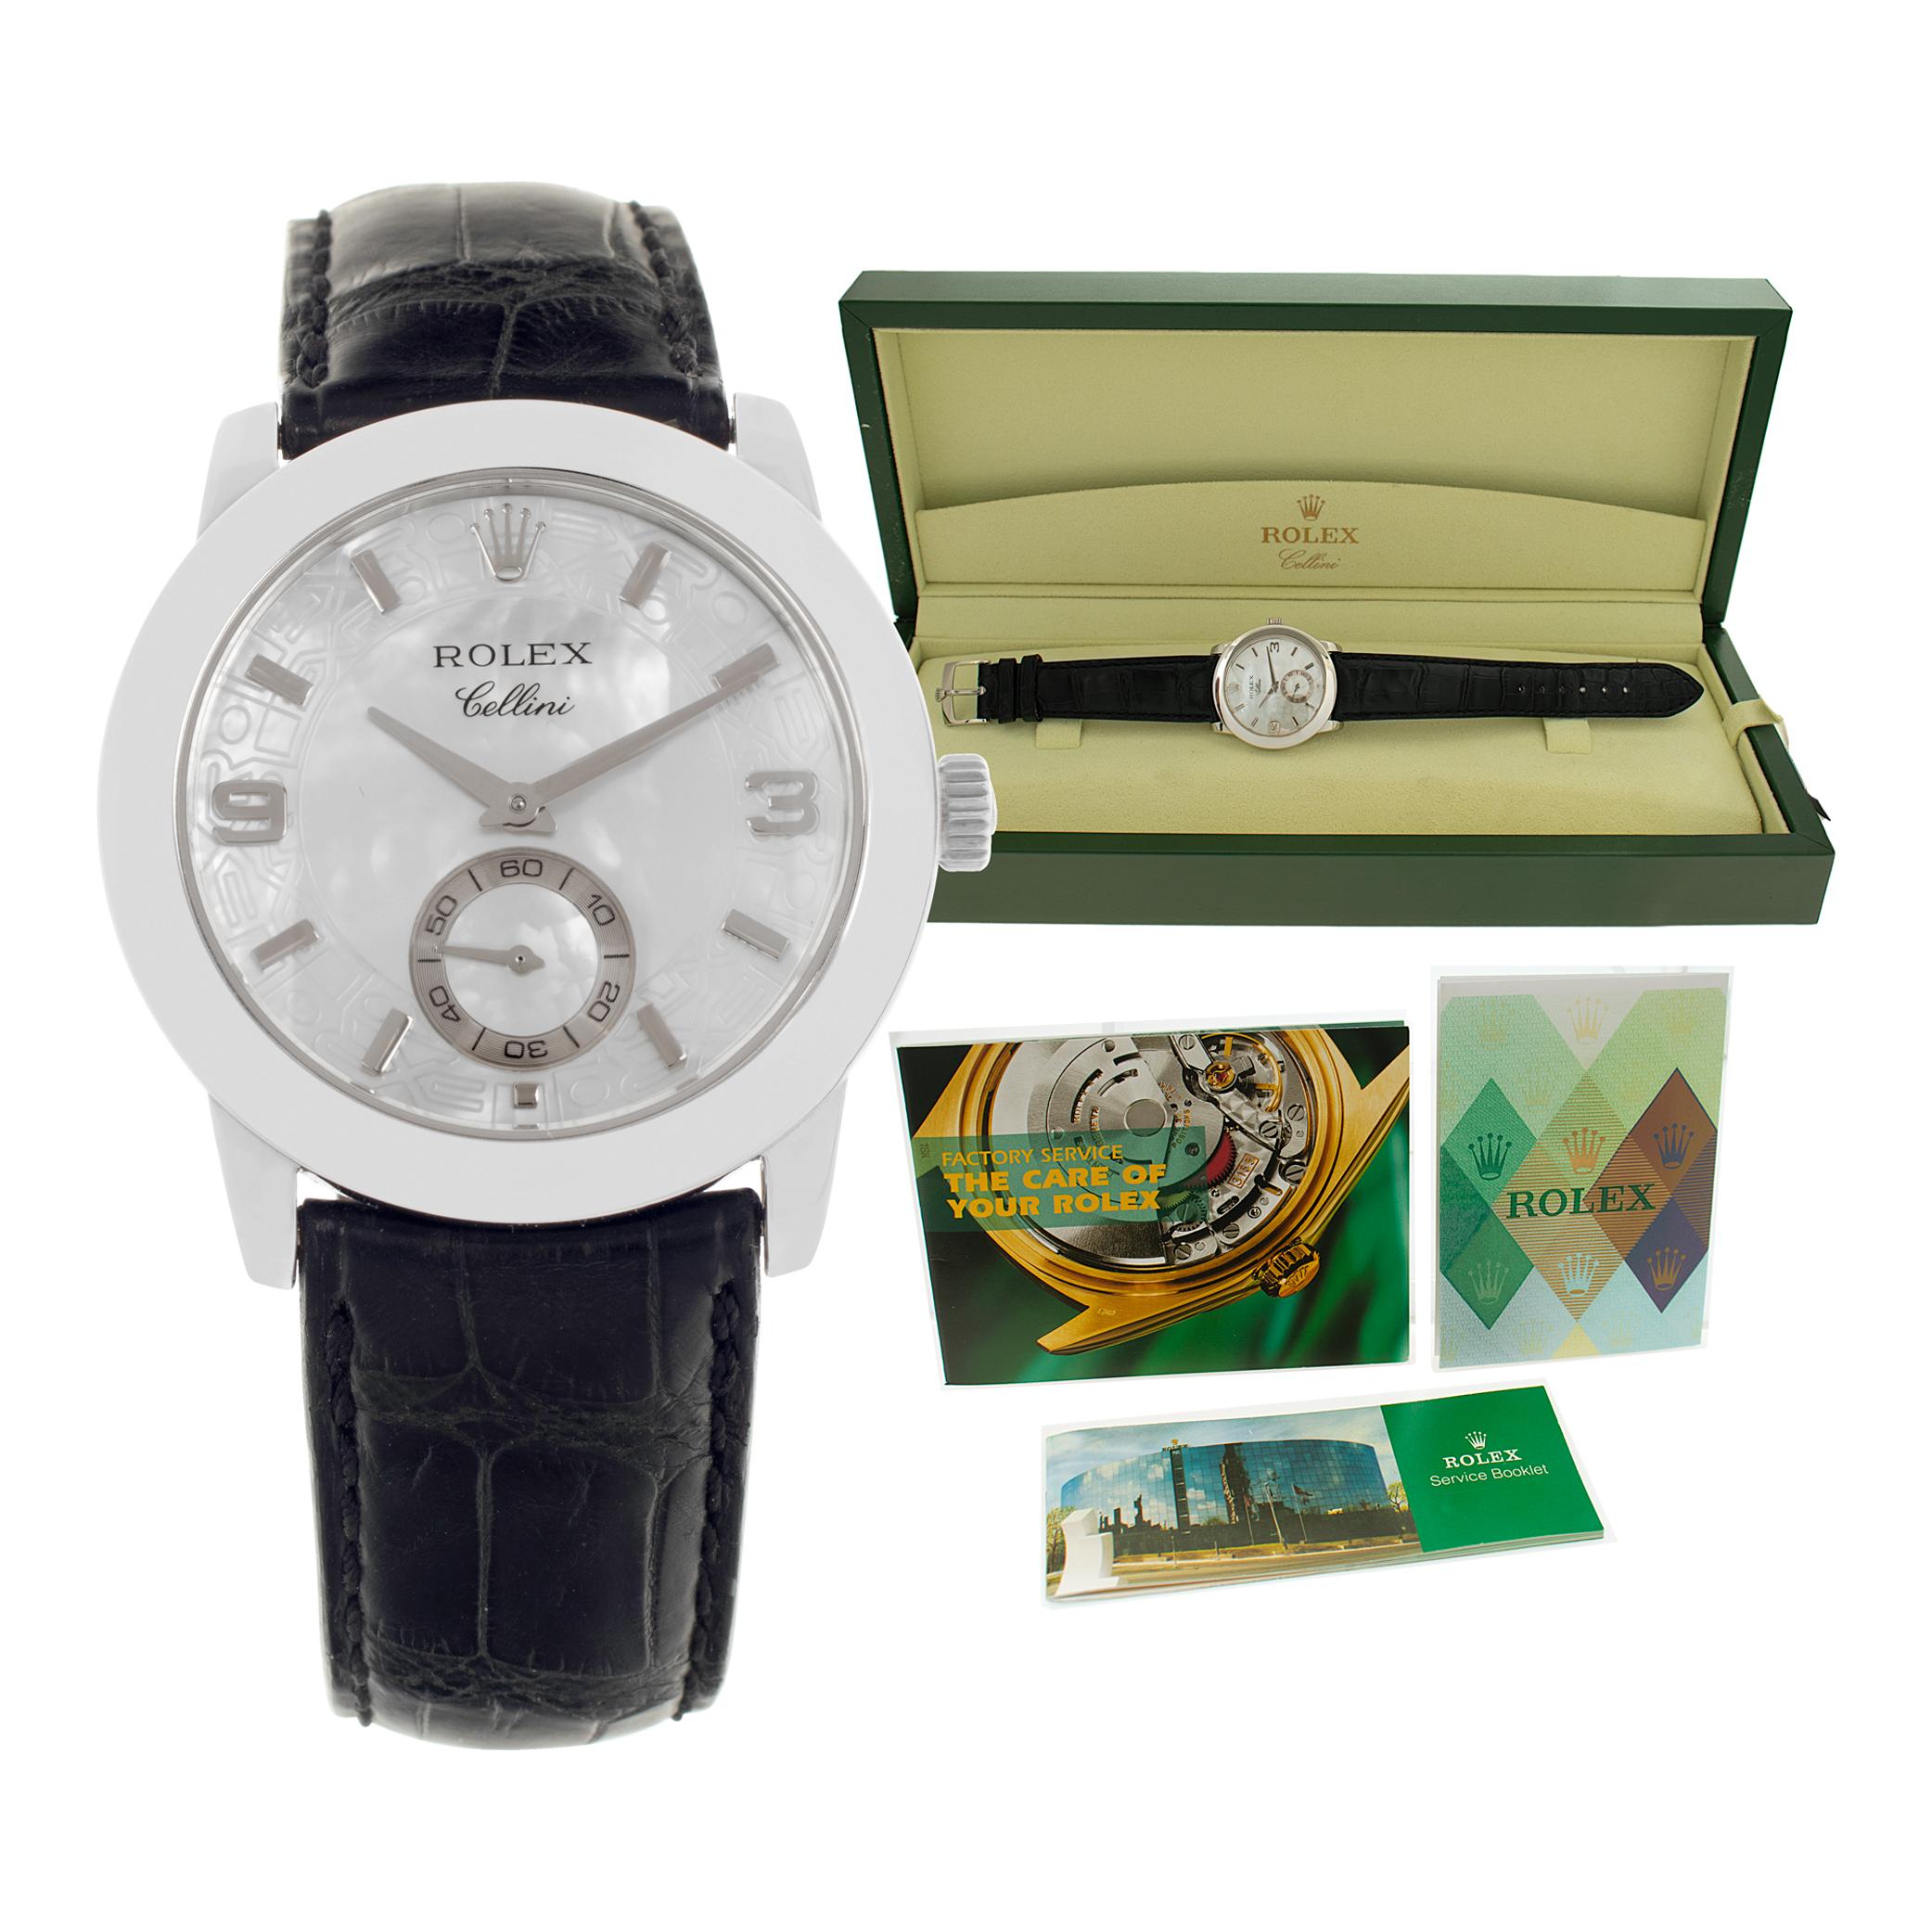 Rolex Cellini platinum Manual Wristwatch Ref 5240 For Sale 3